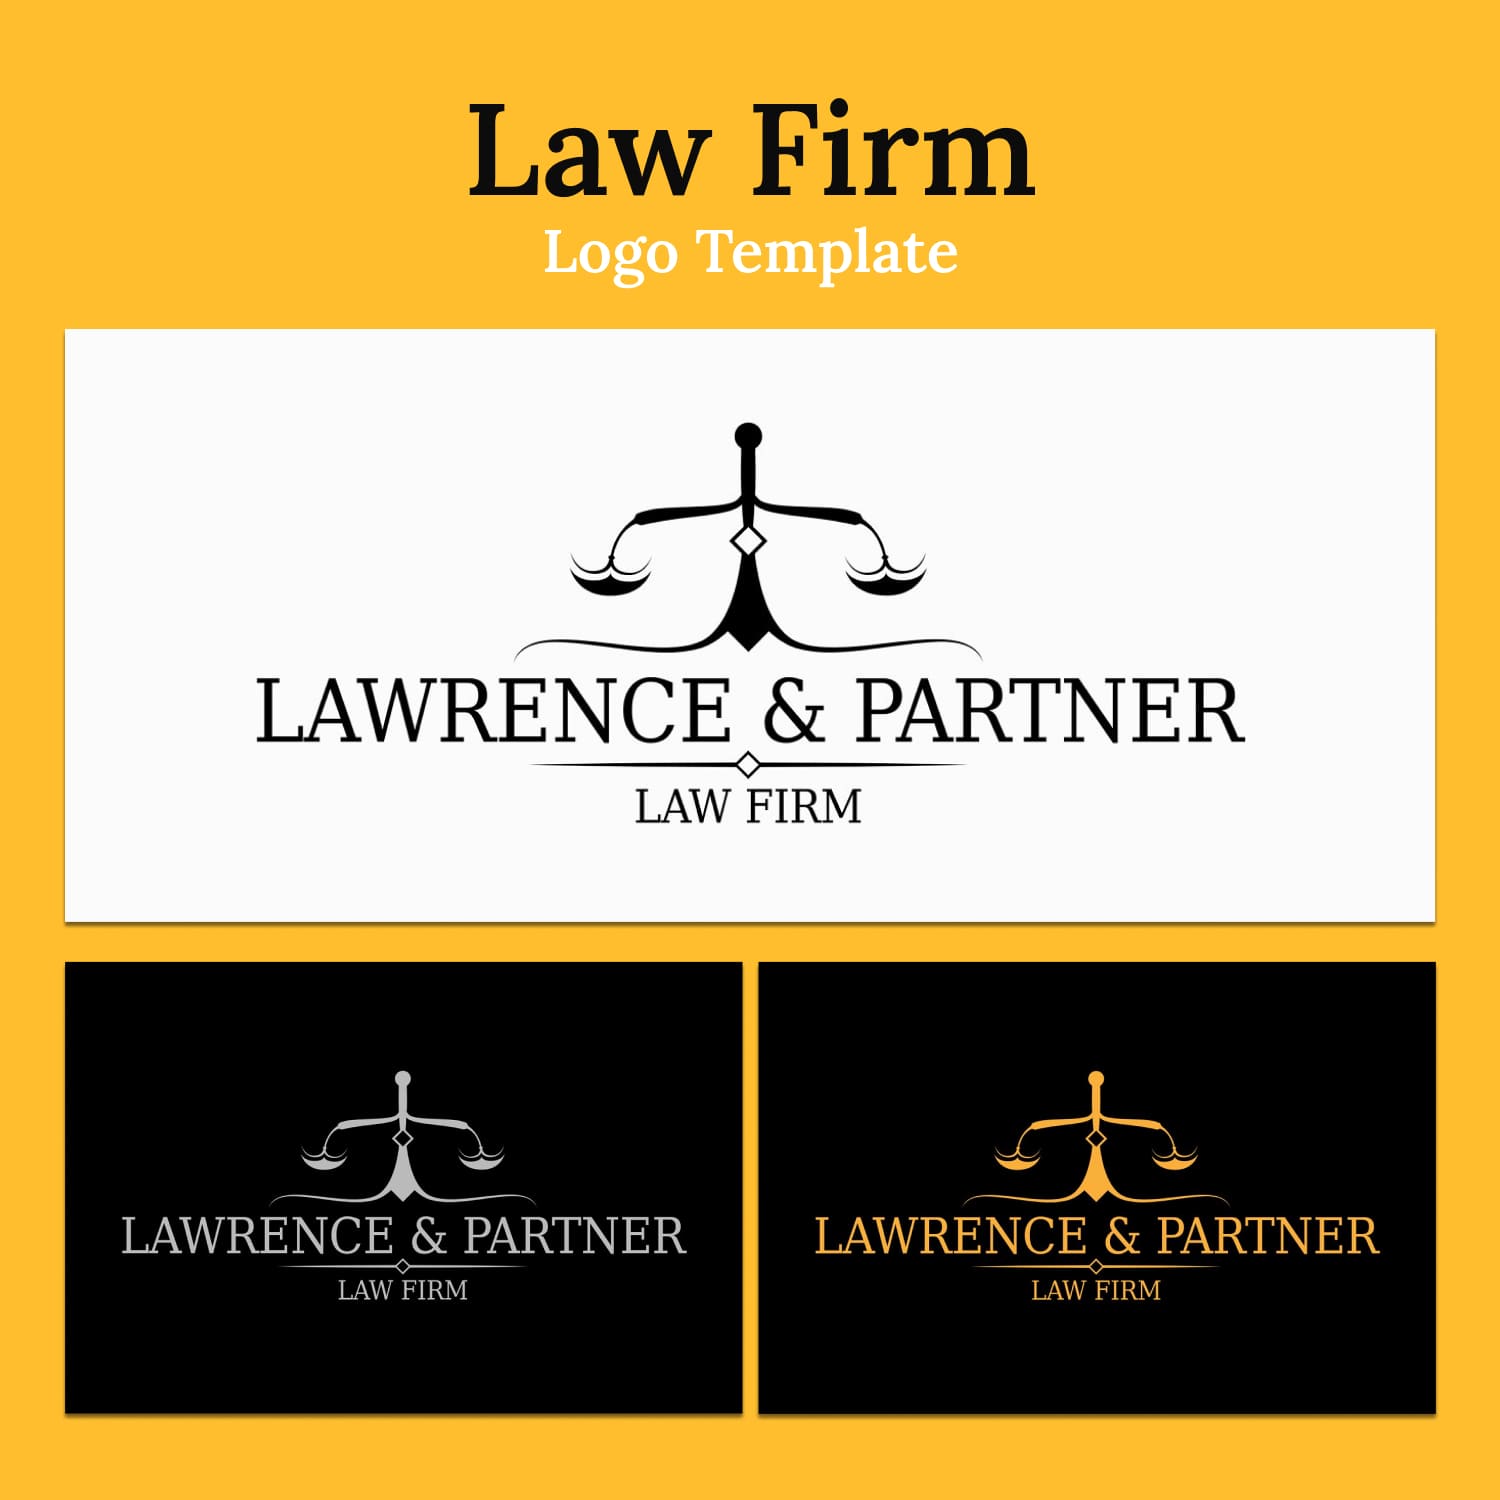 Original Law Firm Logo Template cover image.